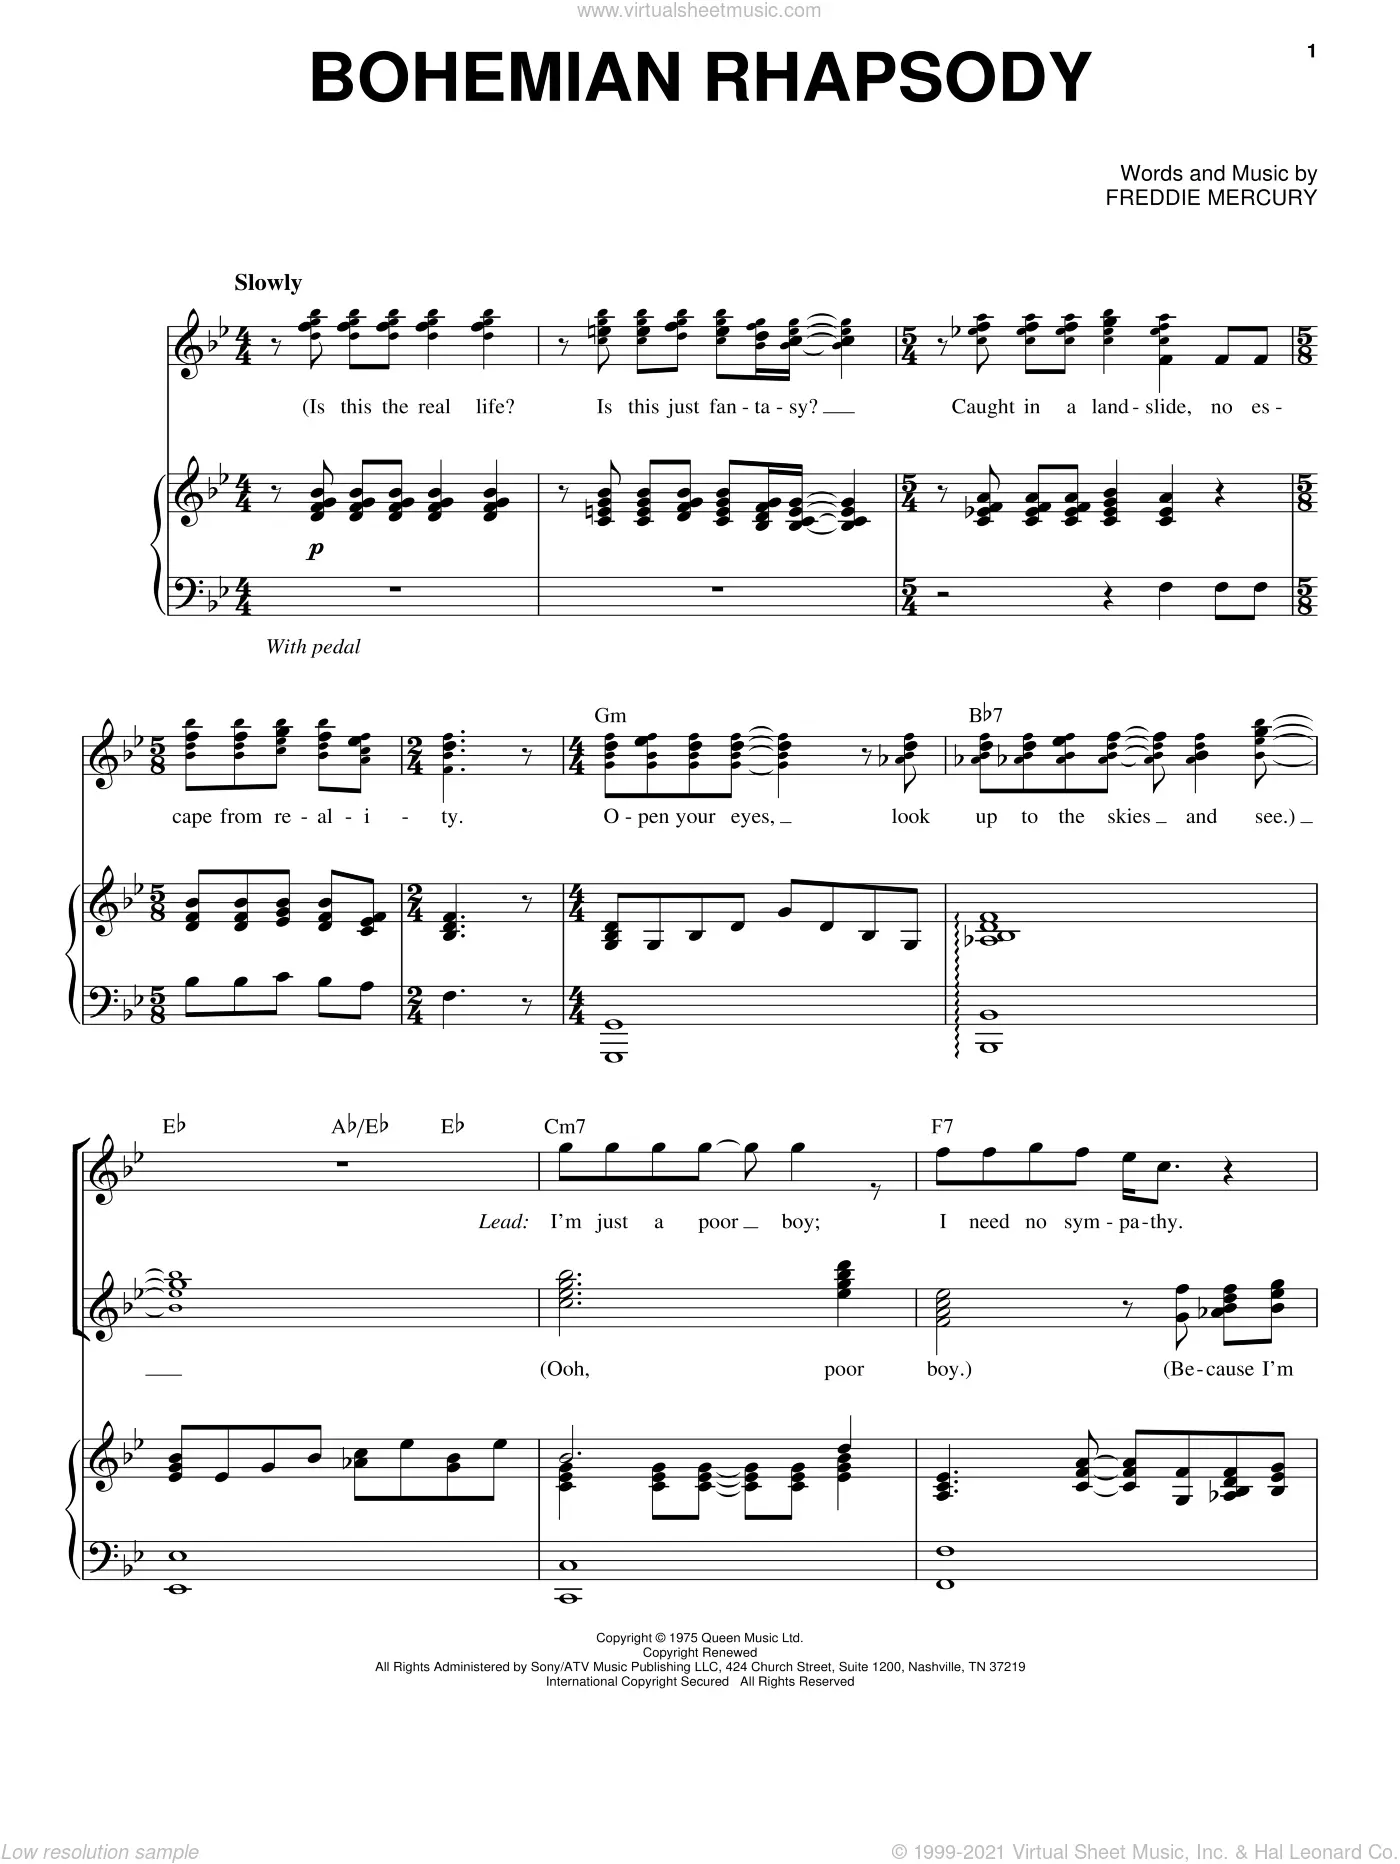 Habitual Sobrio dueña Bohemian Rhapsody Piano, Voice Sheet Music to download and print